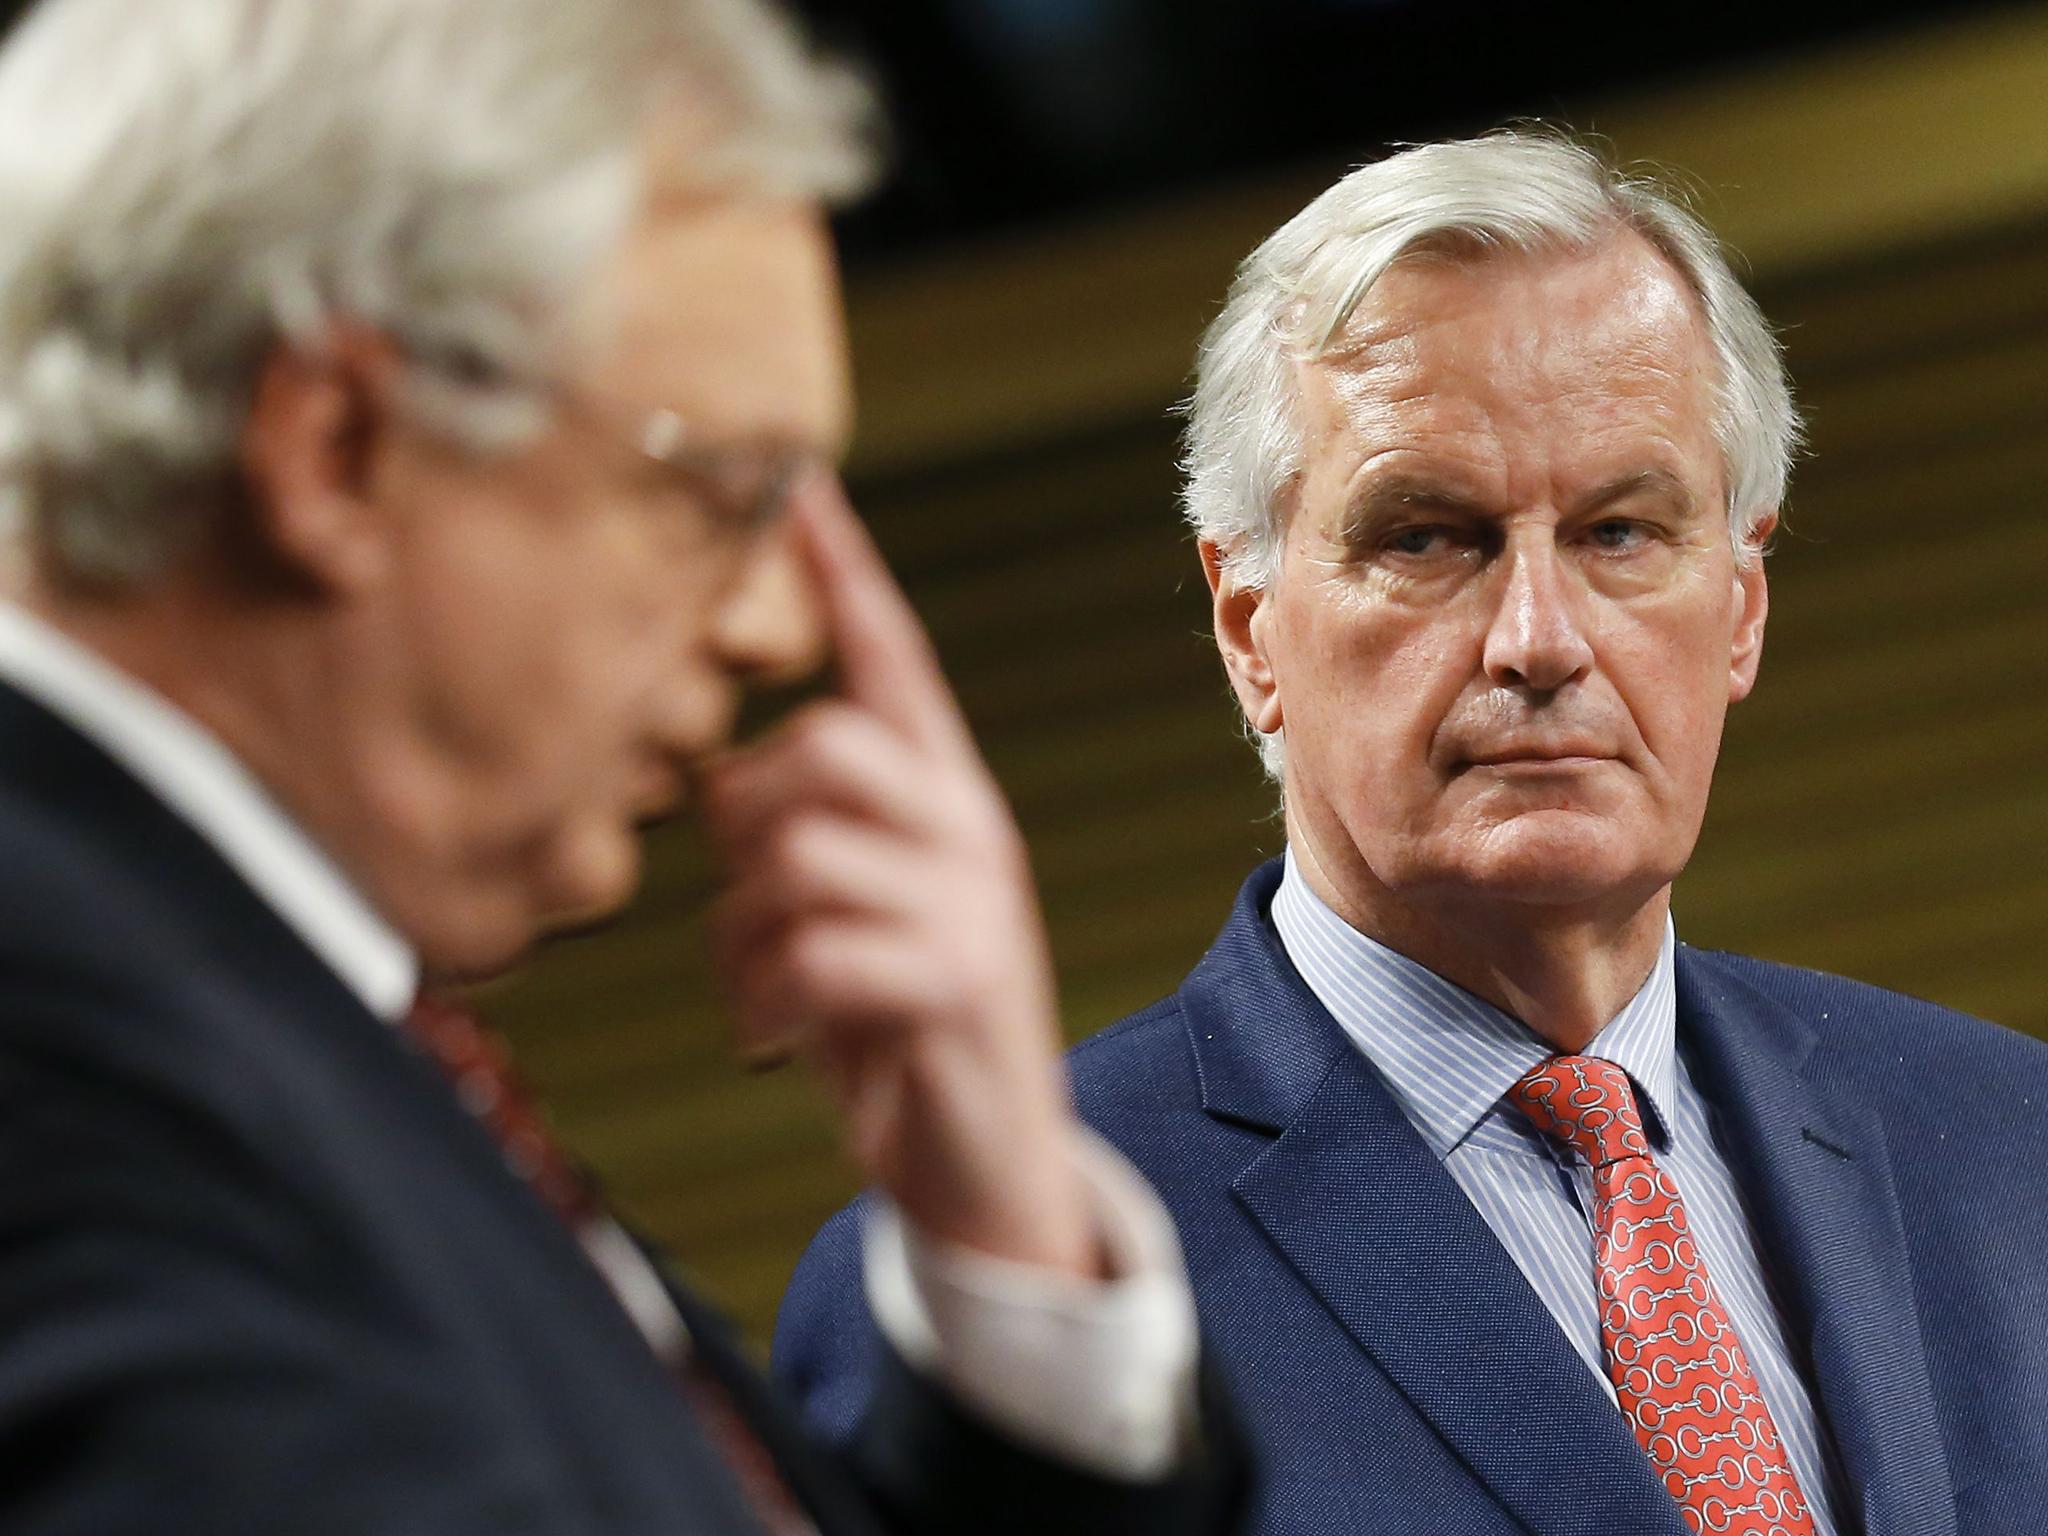 Michel Barnier watches Brexit Secretary David Davis at a meeting earlier this year